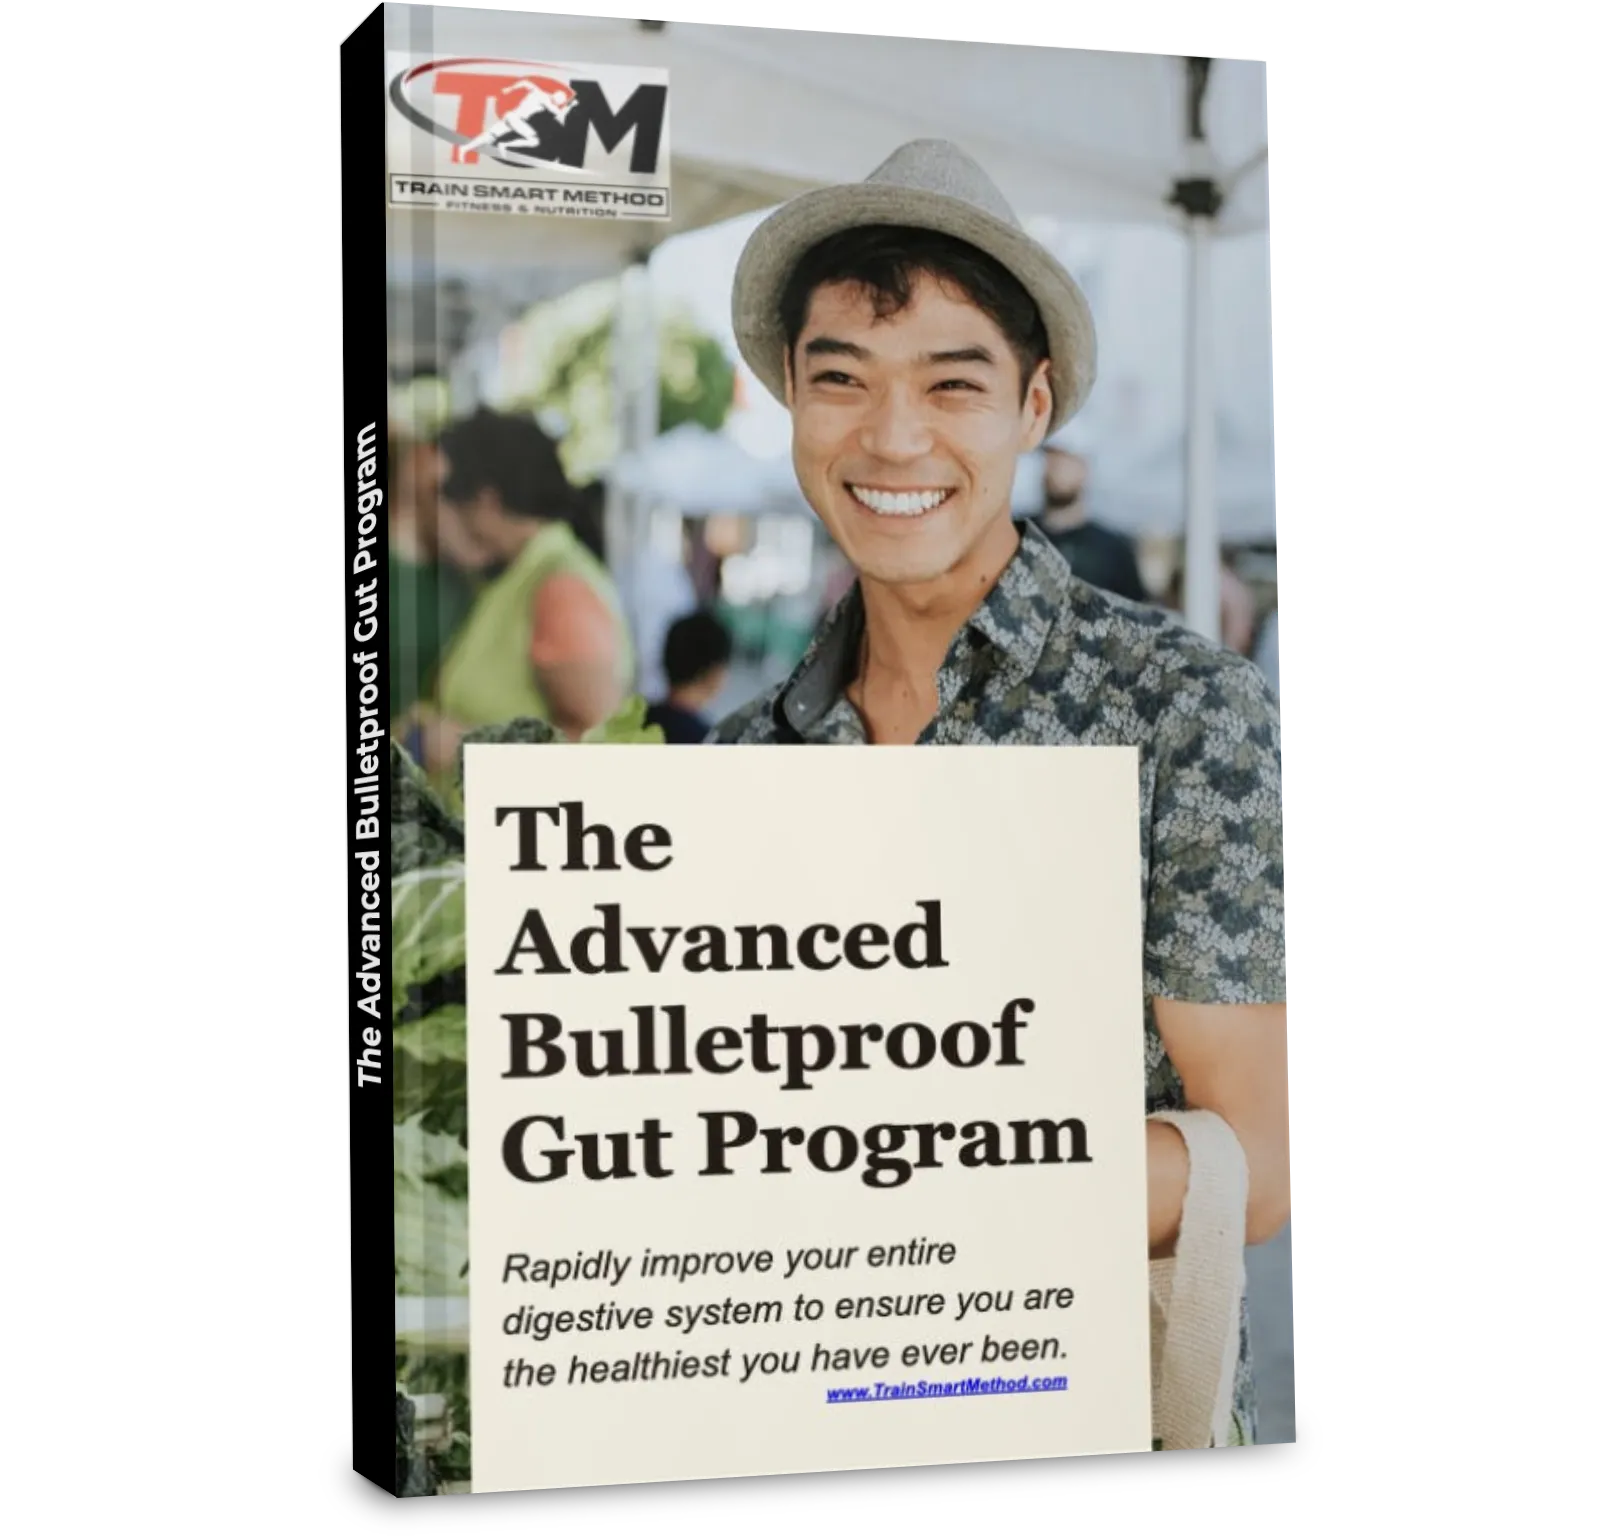 The Advanced Bulletproof Gut Program